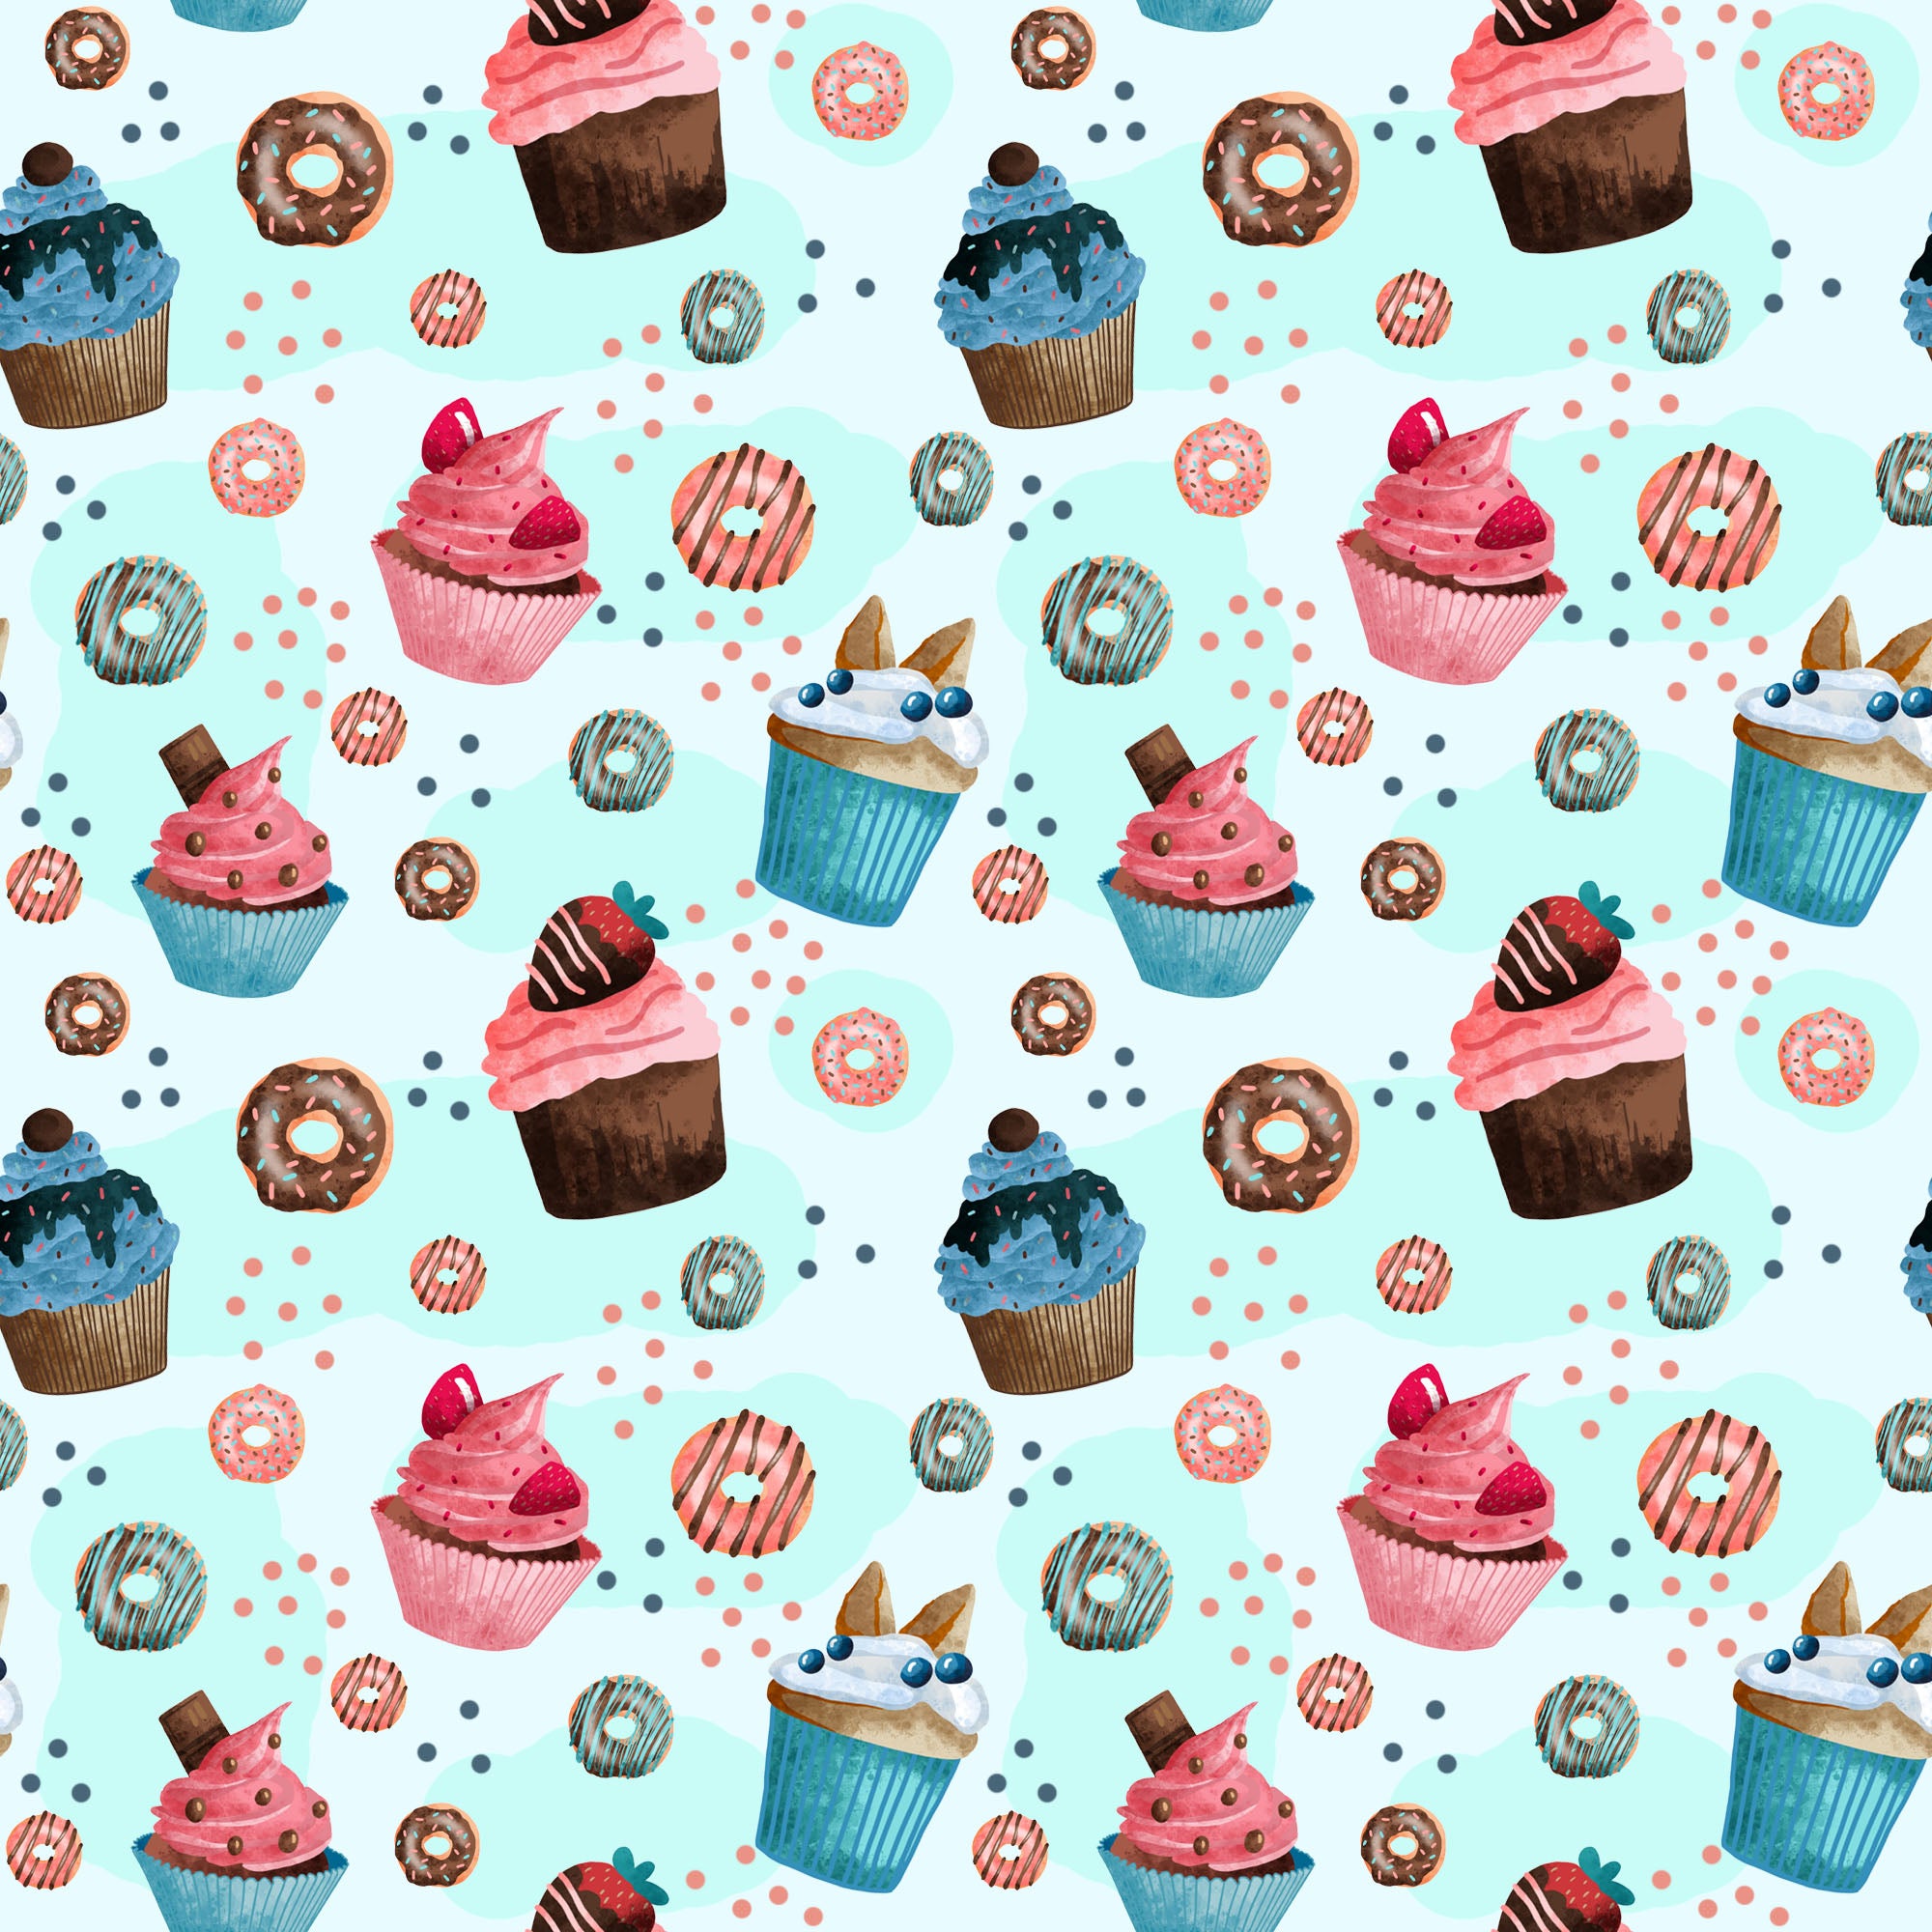 cupcake and donut repeat design